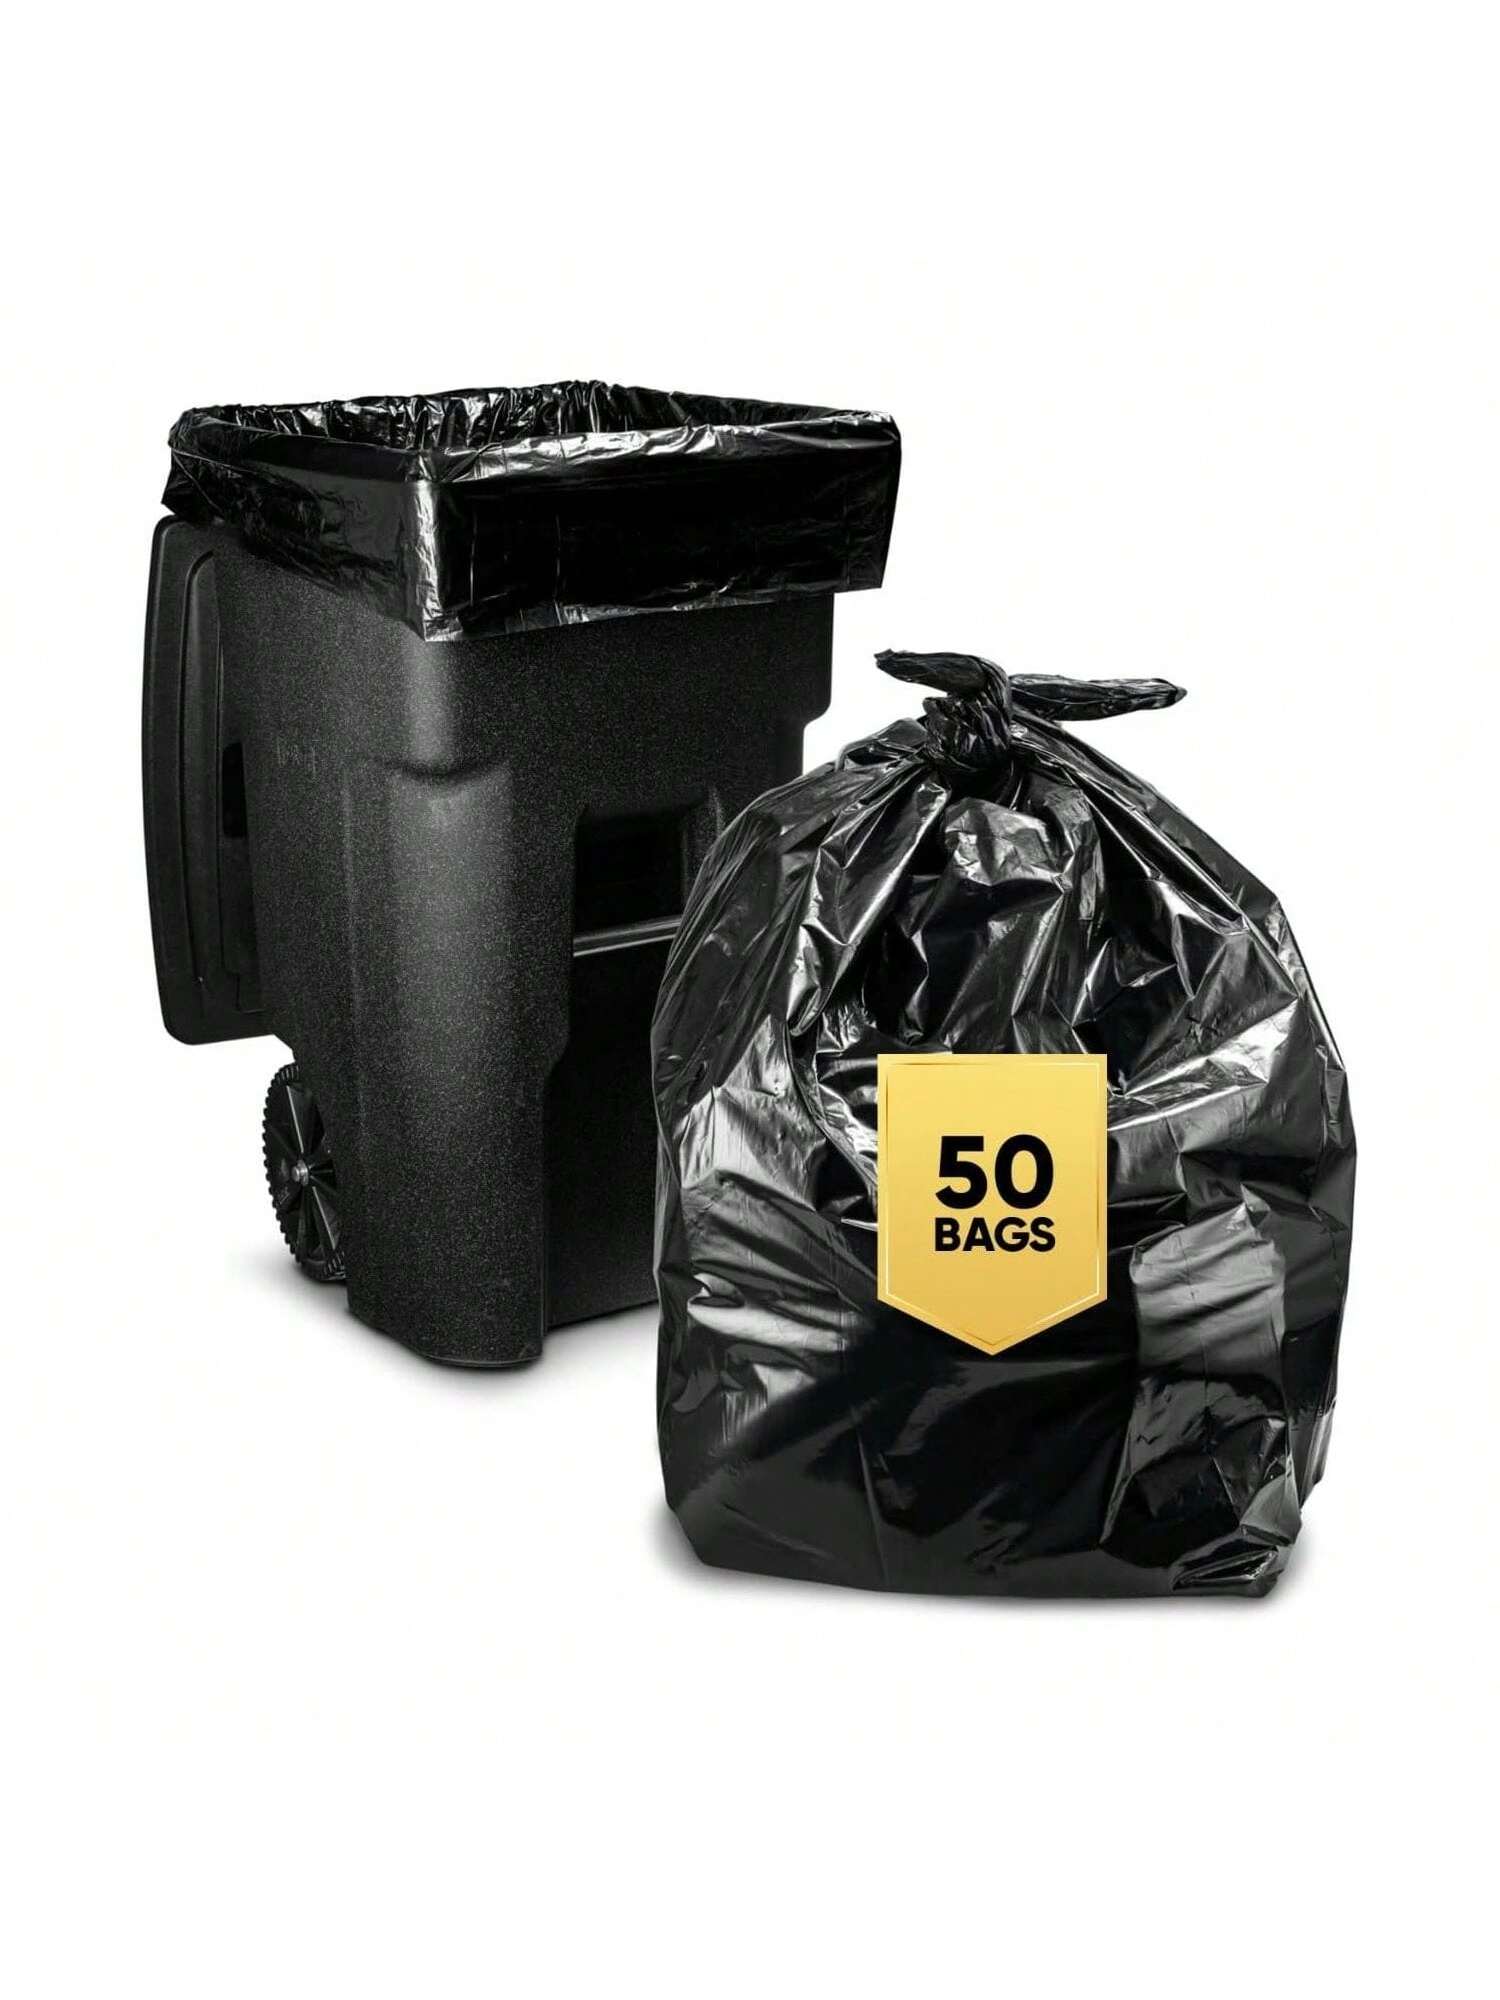 95-96 Gallon Trash Bags 50/Bags w/Ties, Wholesale Large Black